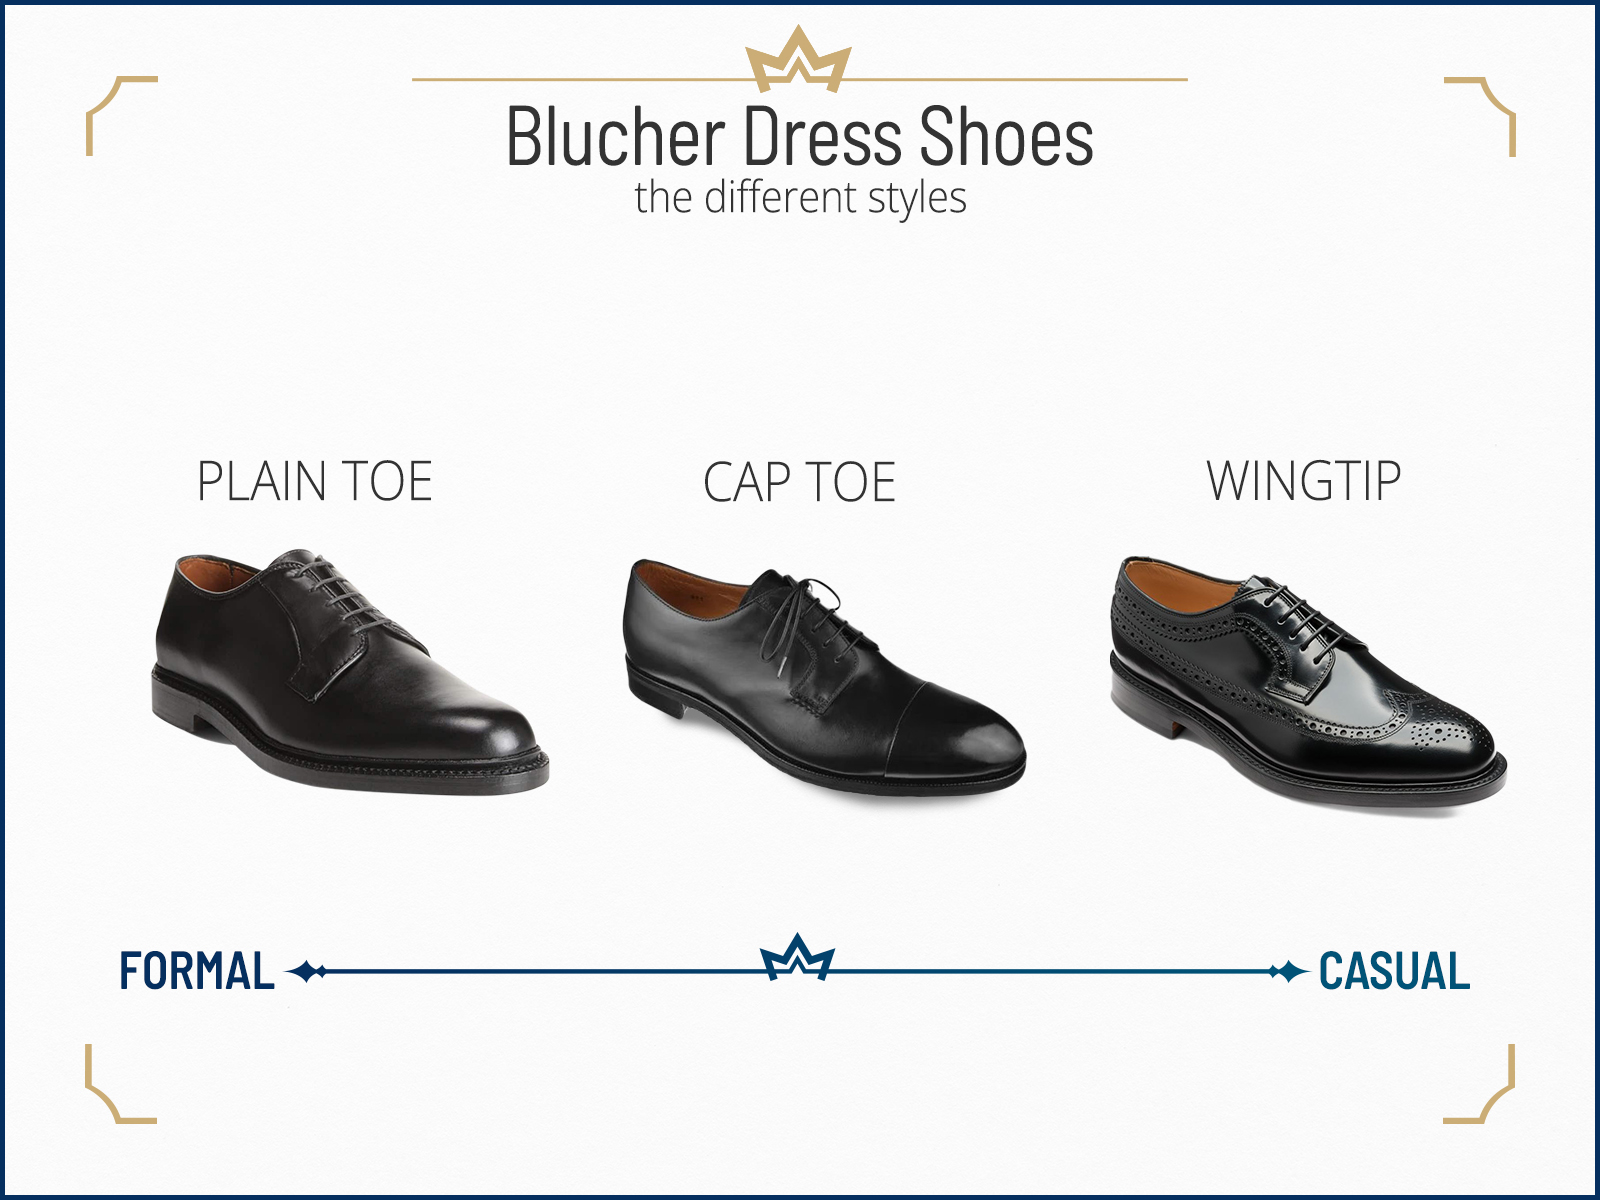 Different blucher dress shoes: types and formality: plain toe vs. cap toe vs. wingtip